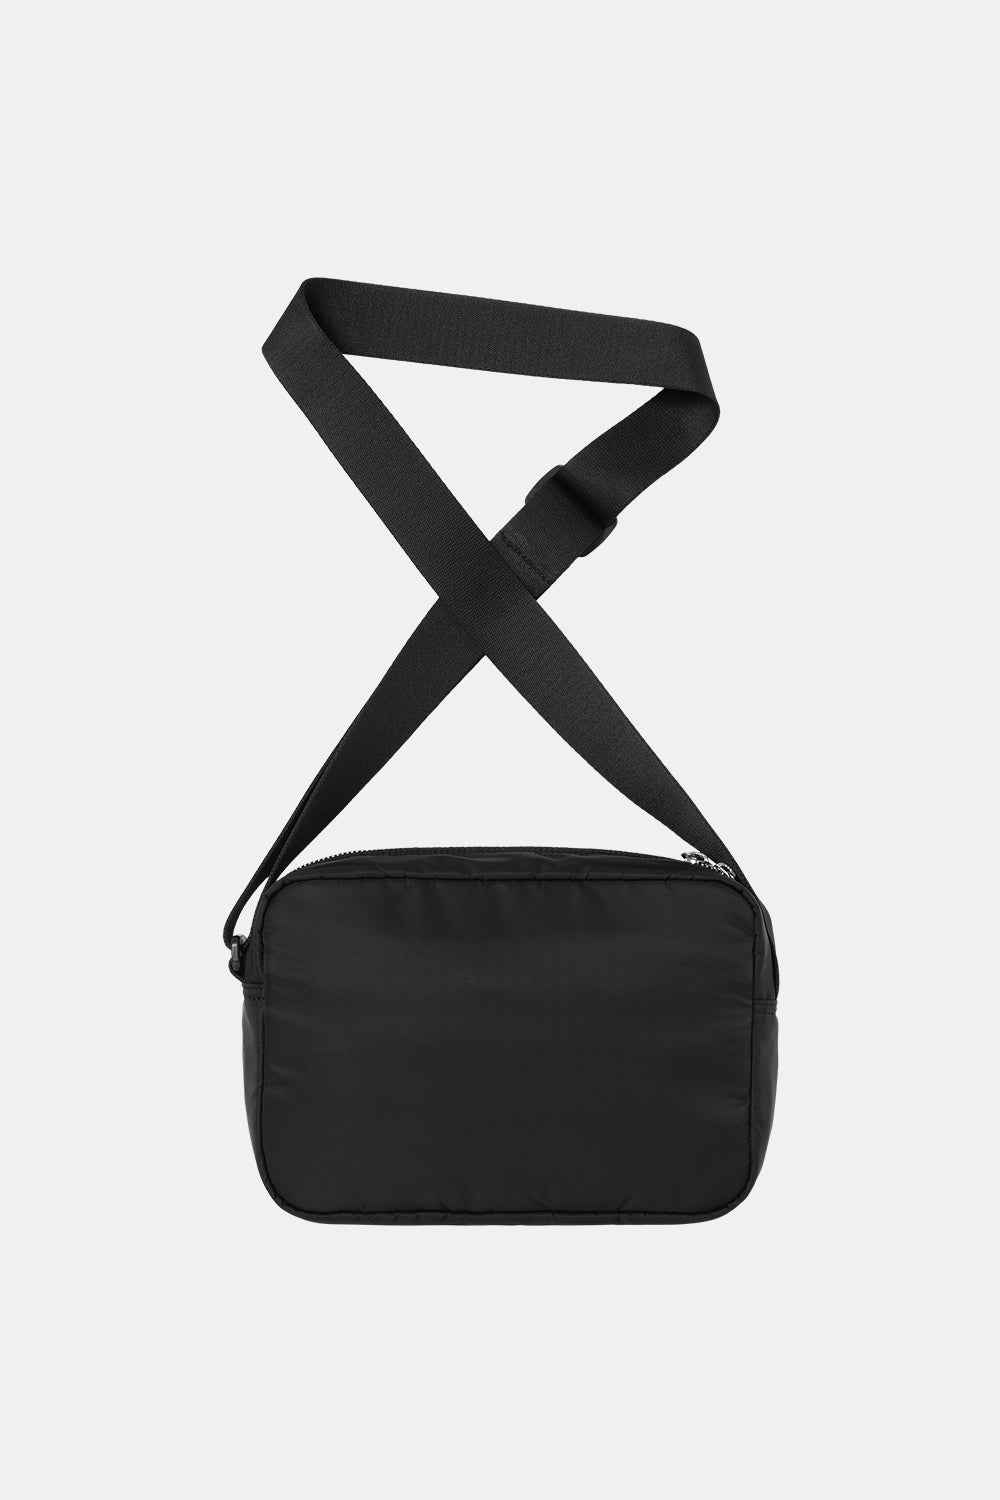 Carhartt WIP Otley Shoulder Bag (Black)
